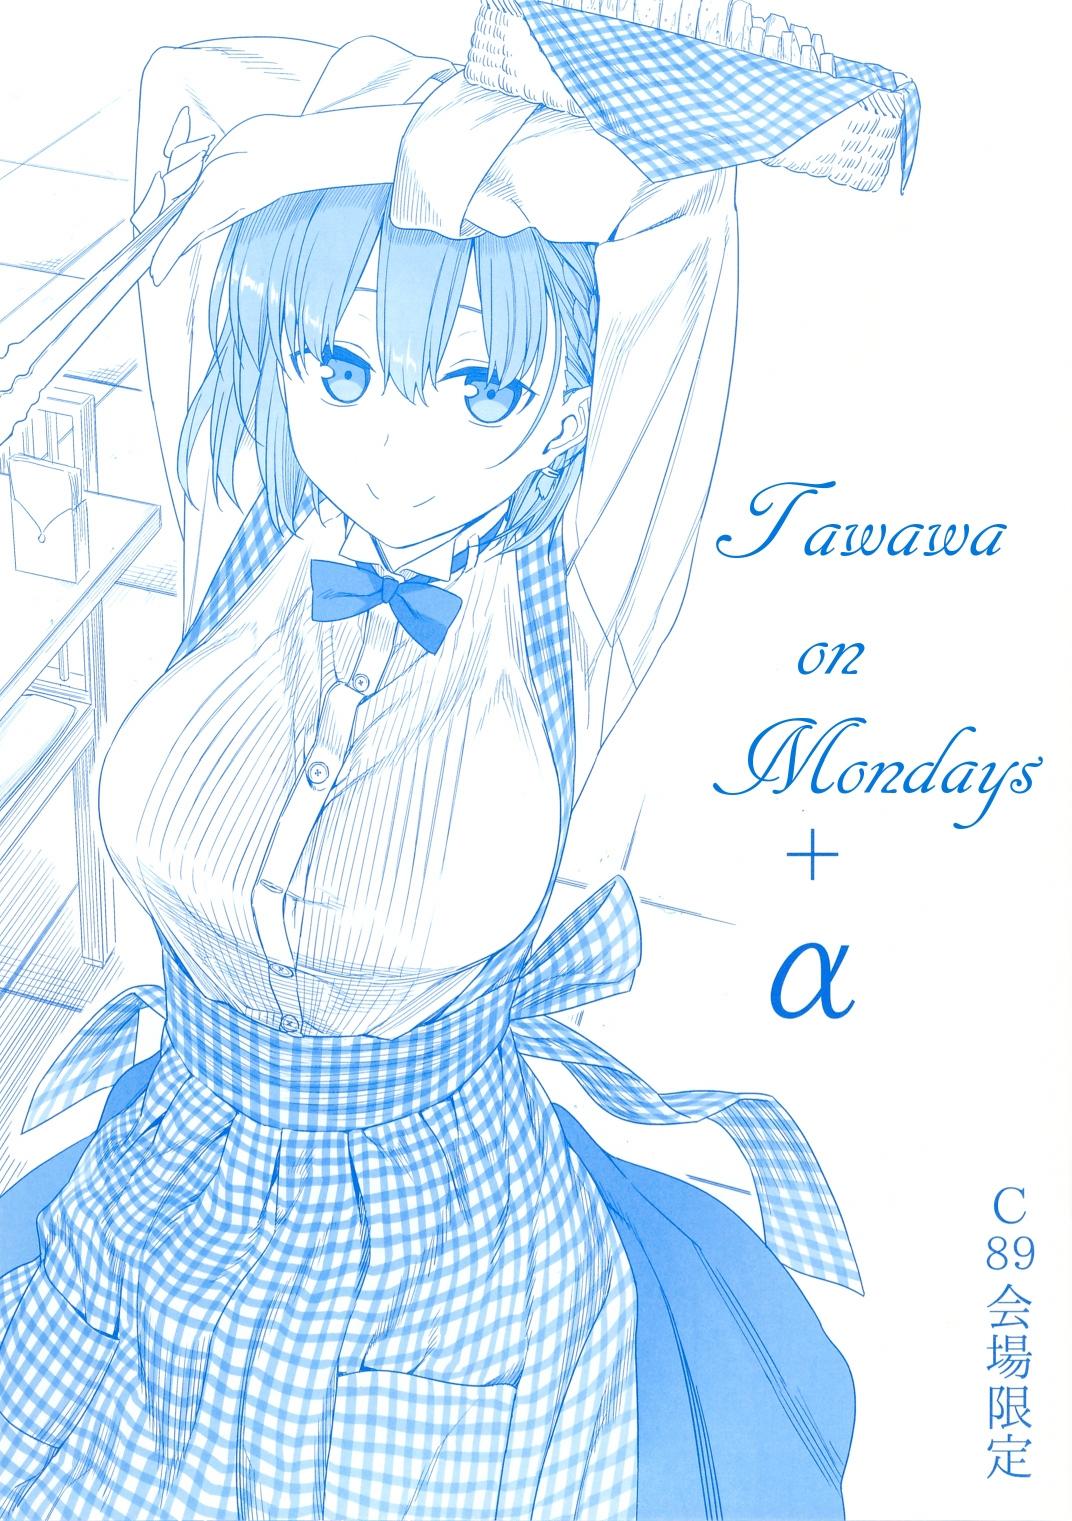 Read Getsuyoubi No Tawawa Chapter 10: Getsuyoubi No Tawawa Sono X on  Mangakakalot